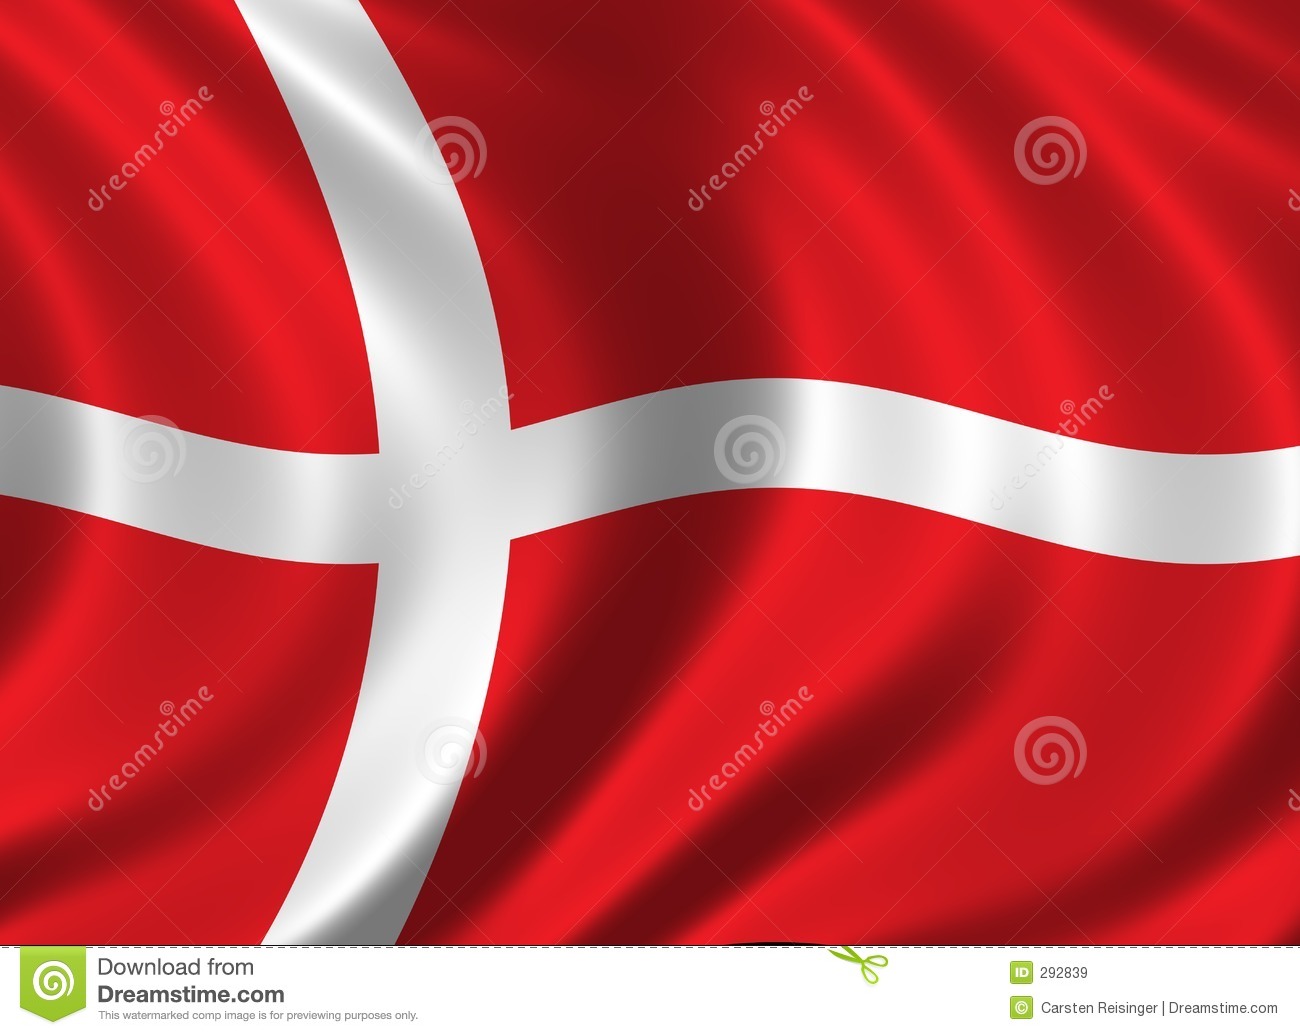 Flag Of Denmark Backgrounds on Wallpapers Vista